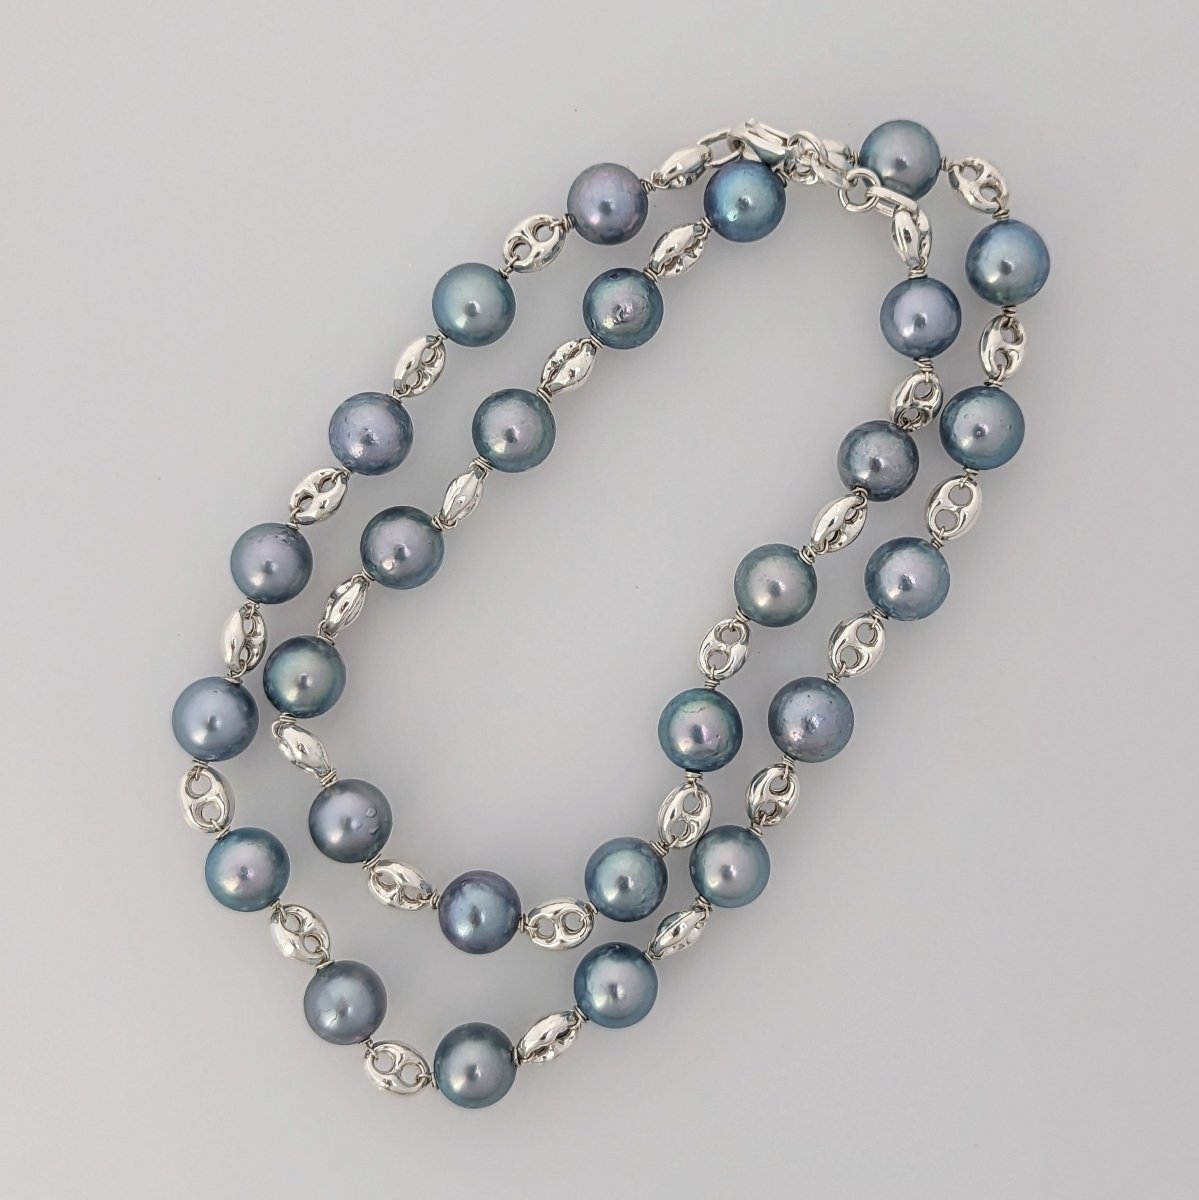 7.5-8.0mm Wire Wrap Dyed Akoya Pearl Necklace - Marina Korneev Fine Pearls